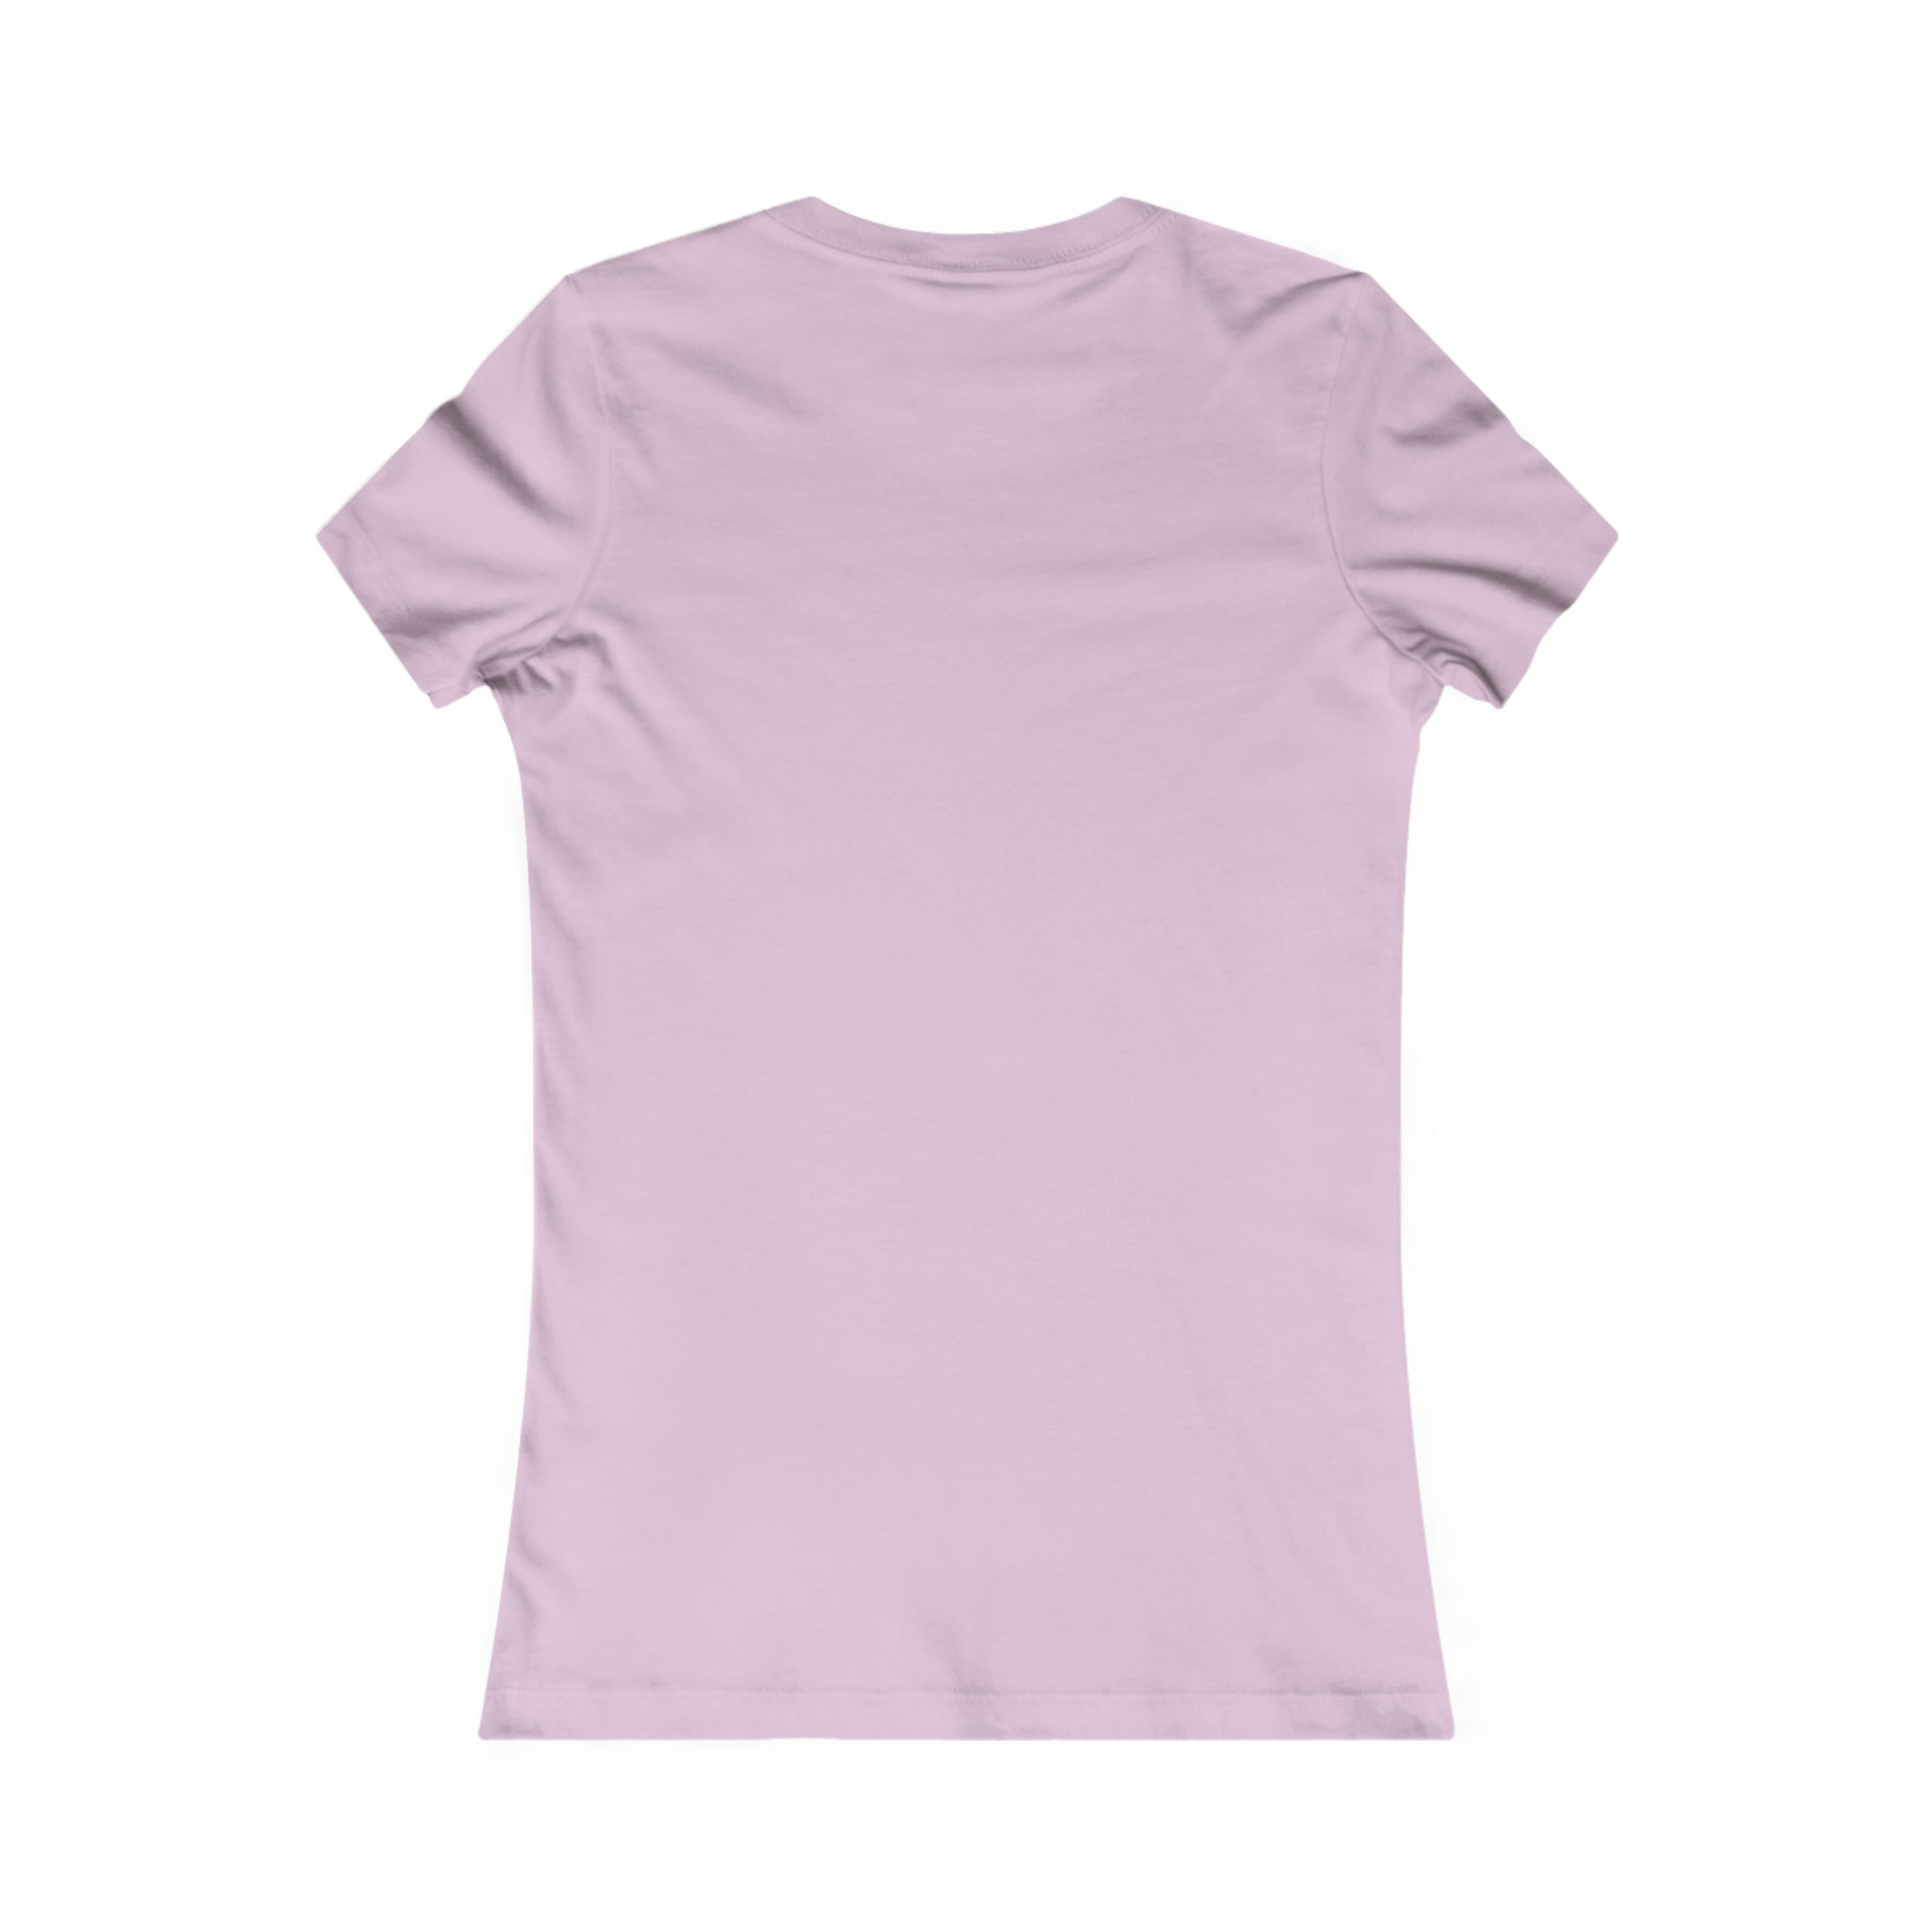 Faith It Til You Make It - Women's Soft Blend High Quality T-shirt Printify